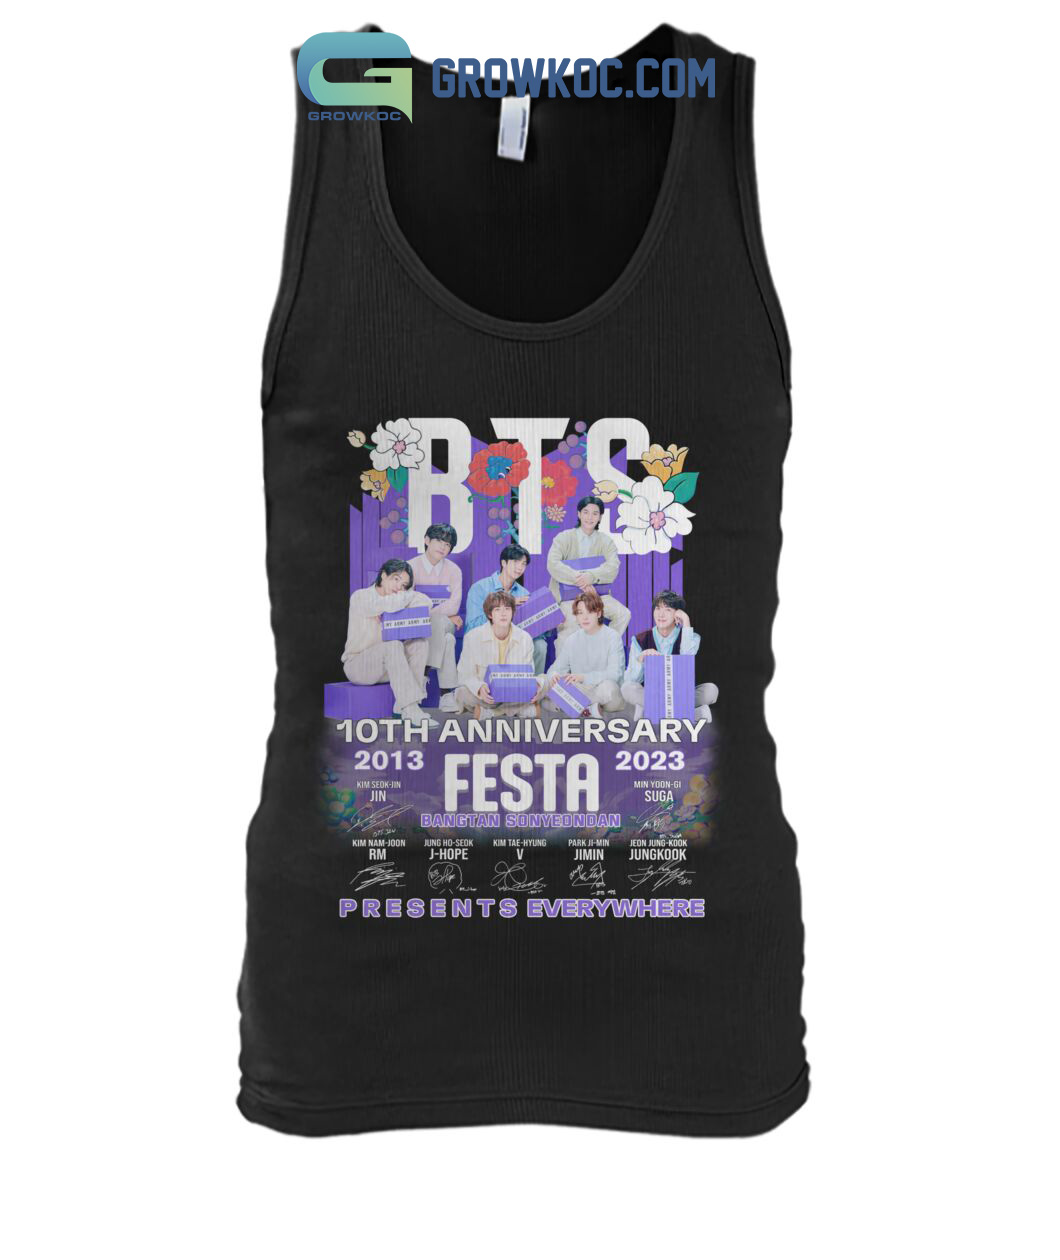 BTS 10th Anniversary 2013 2023 Festa Presents Everywhere Signature T Shirt